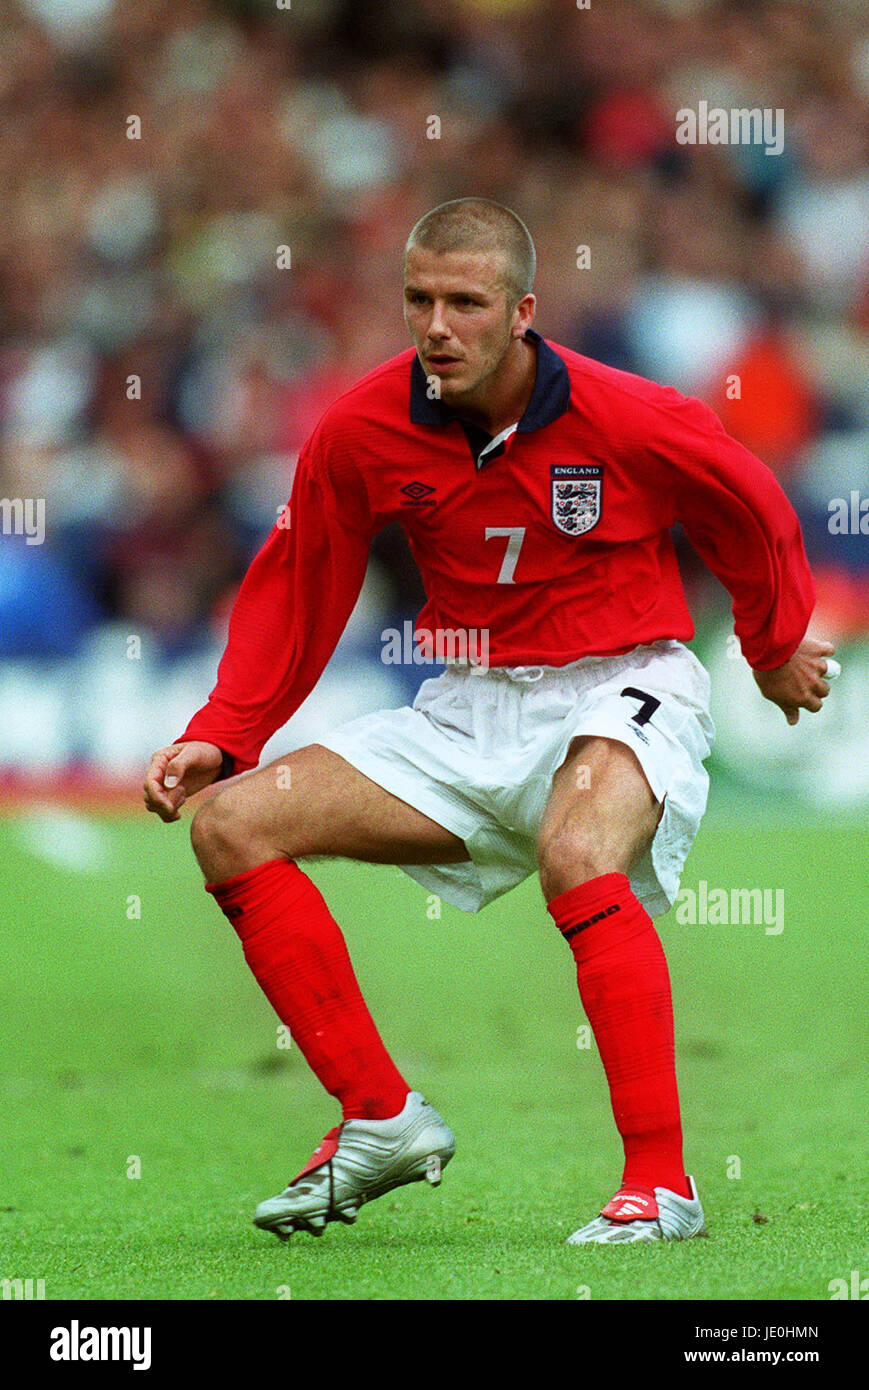 DAVID BECKHAM ENGLAND & MANCHESTER UNITED FC 27 May 2000 Stock Photo - Alamy